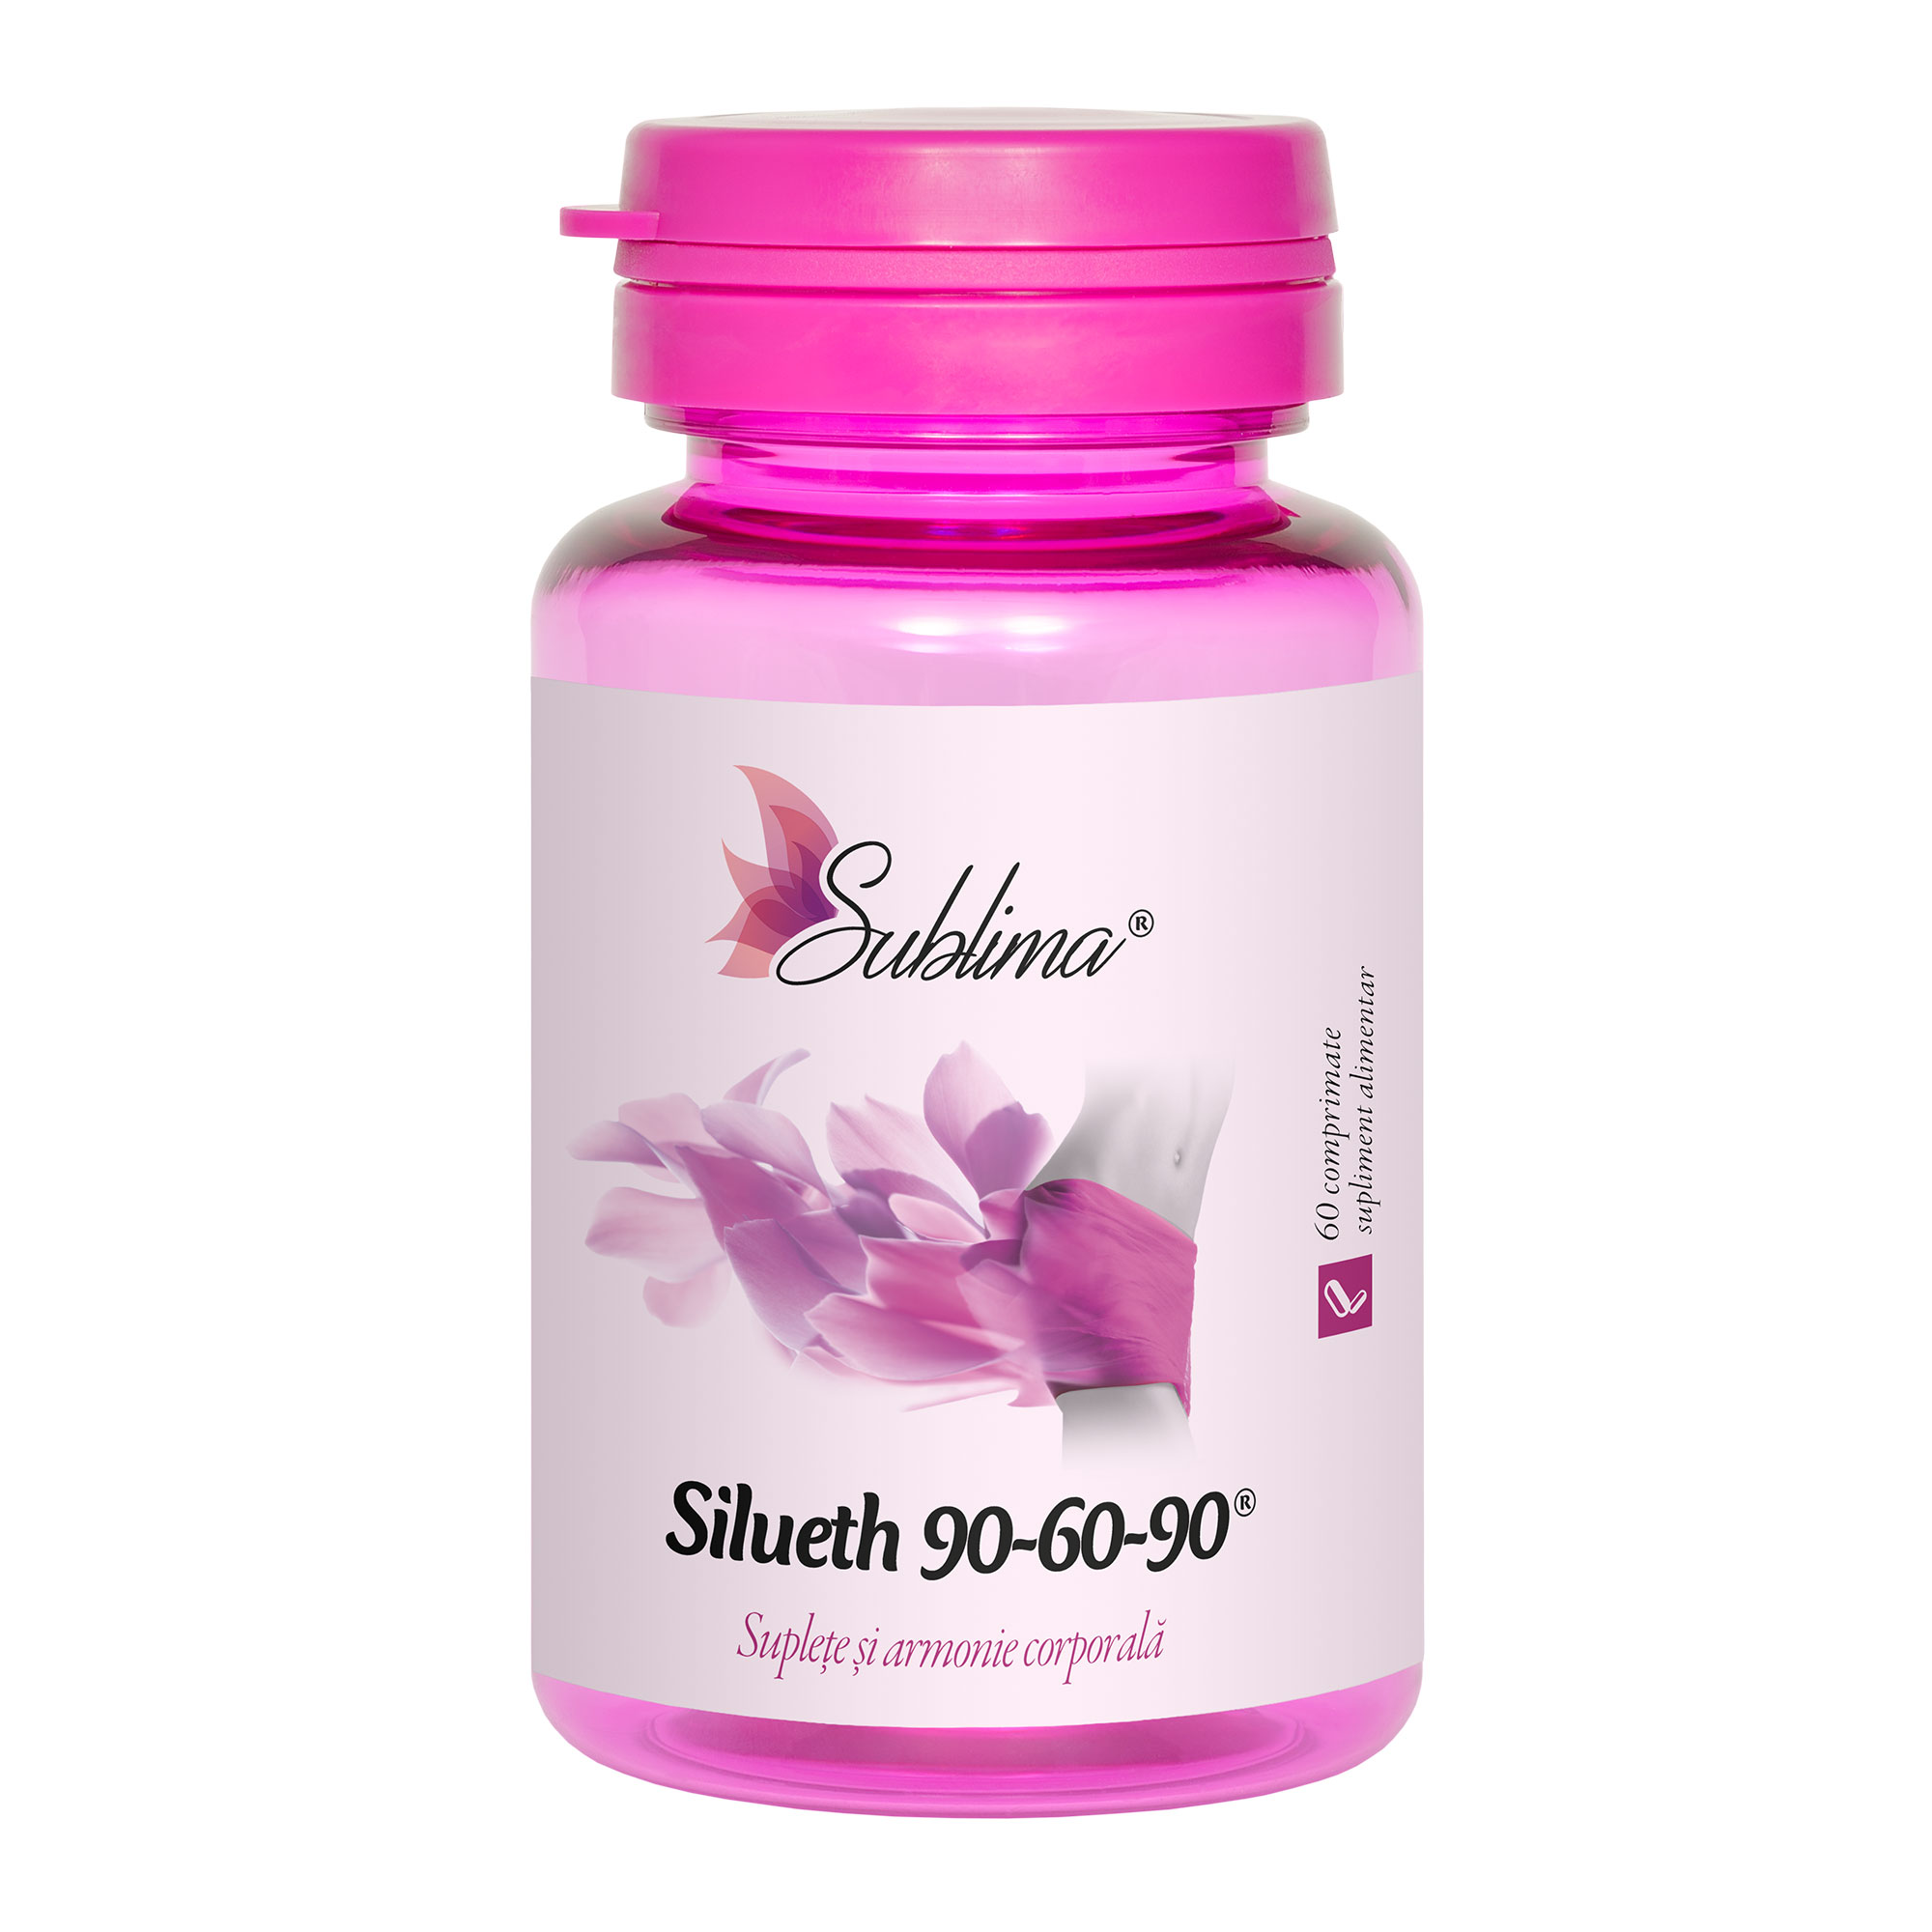 Sublima Silueth 90-60-90 comprimate daciaplant.ro imagine noua